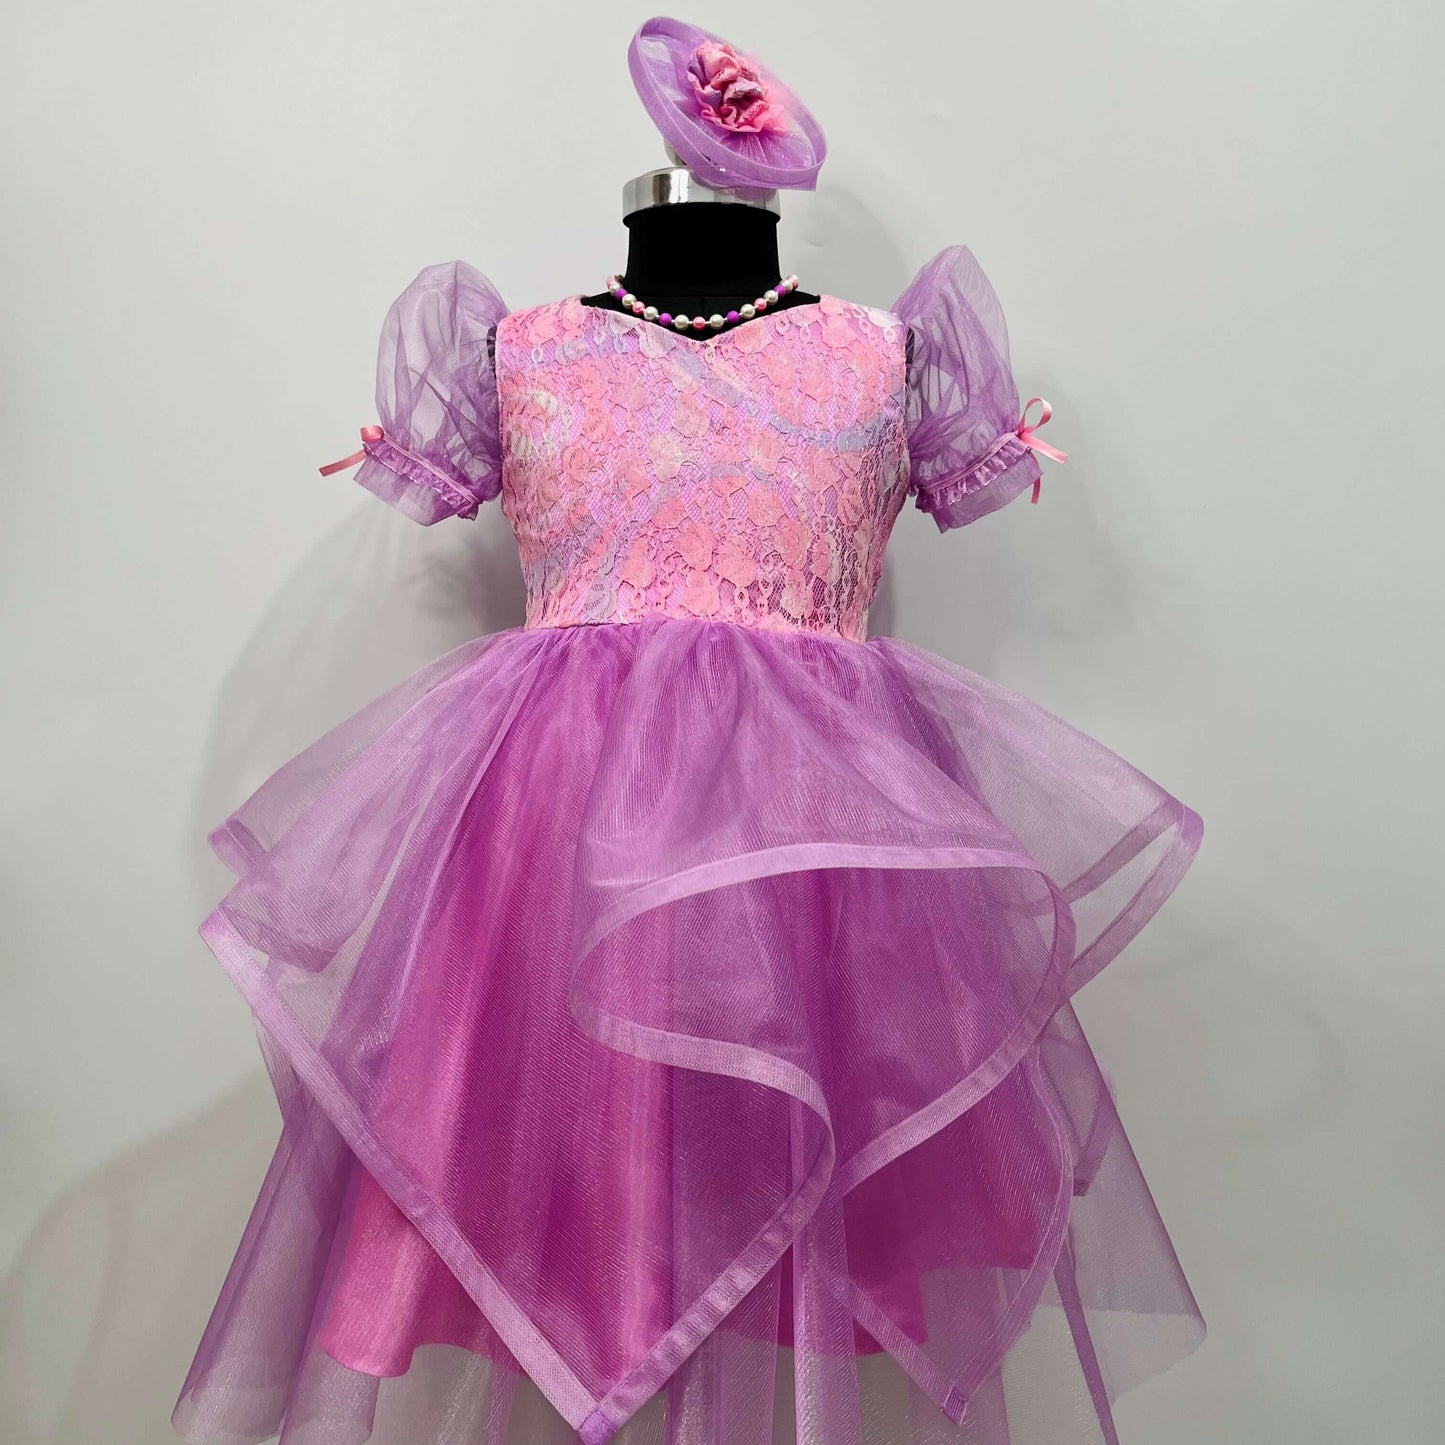 Princess Rapunzel Pink and Purple Dress